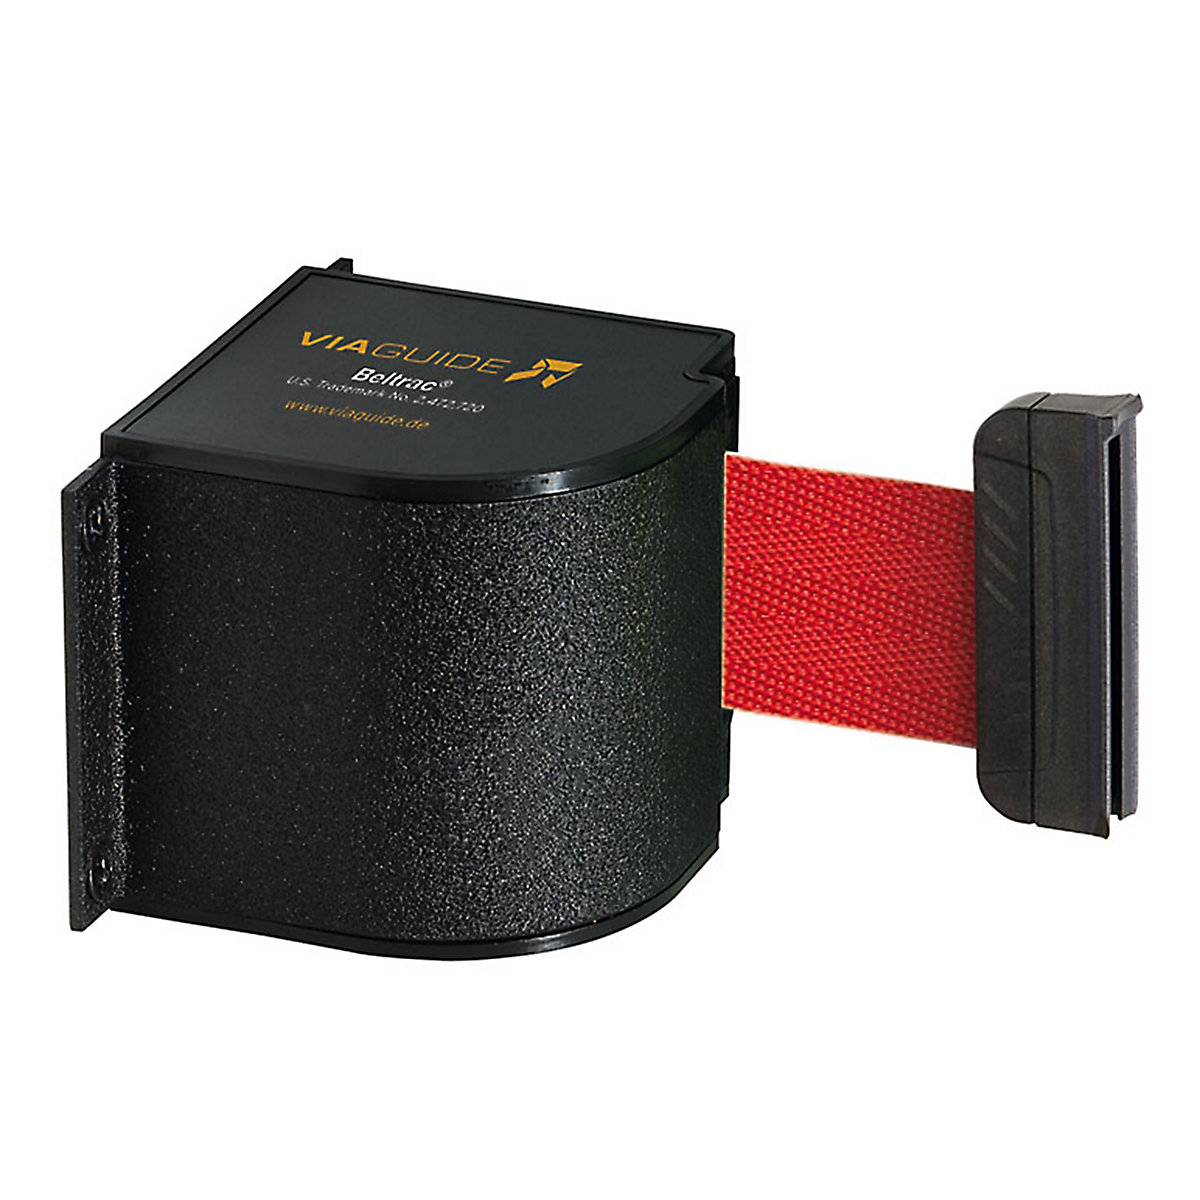 Wall Mount tape belt cartridge, belt extends to max. 5400 mm, belt colour red-4